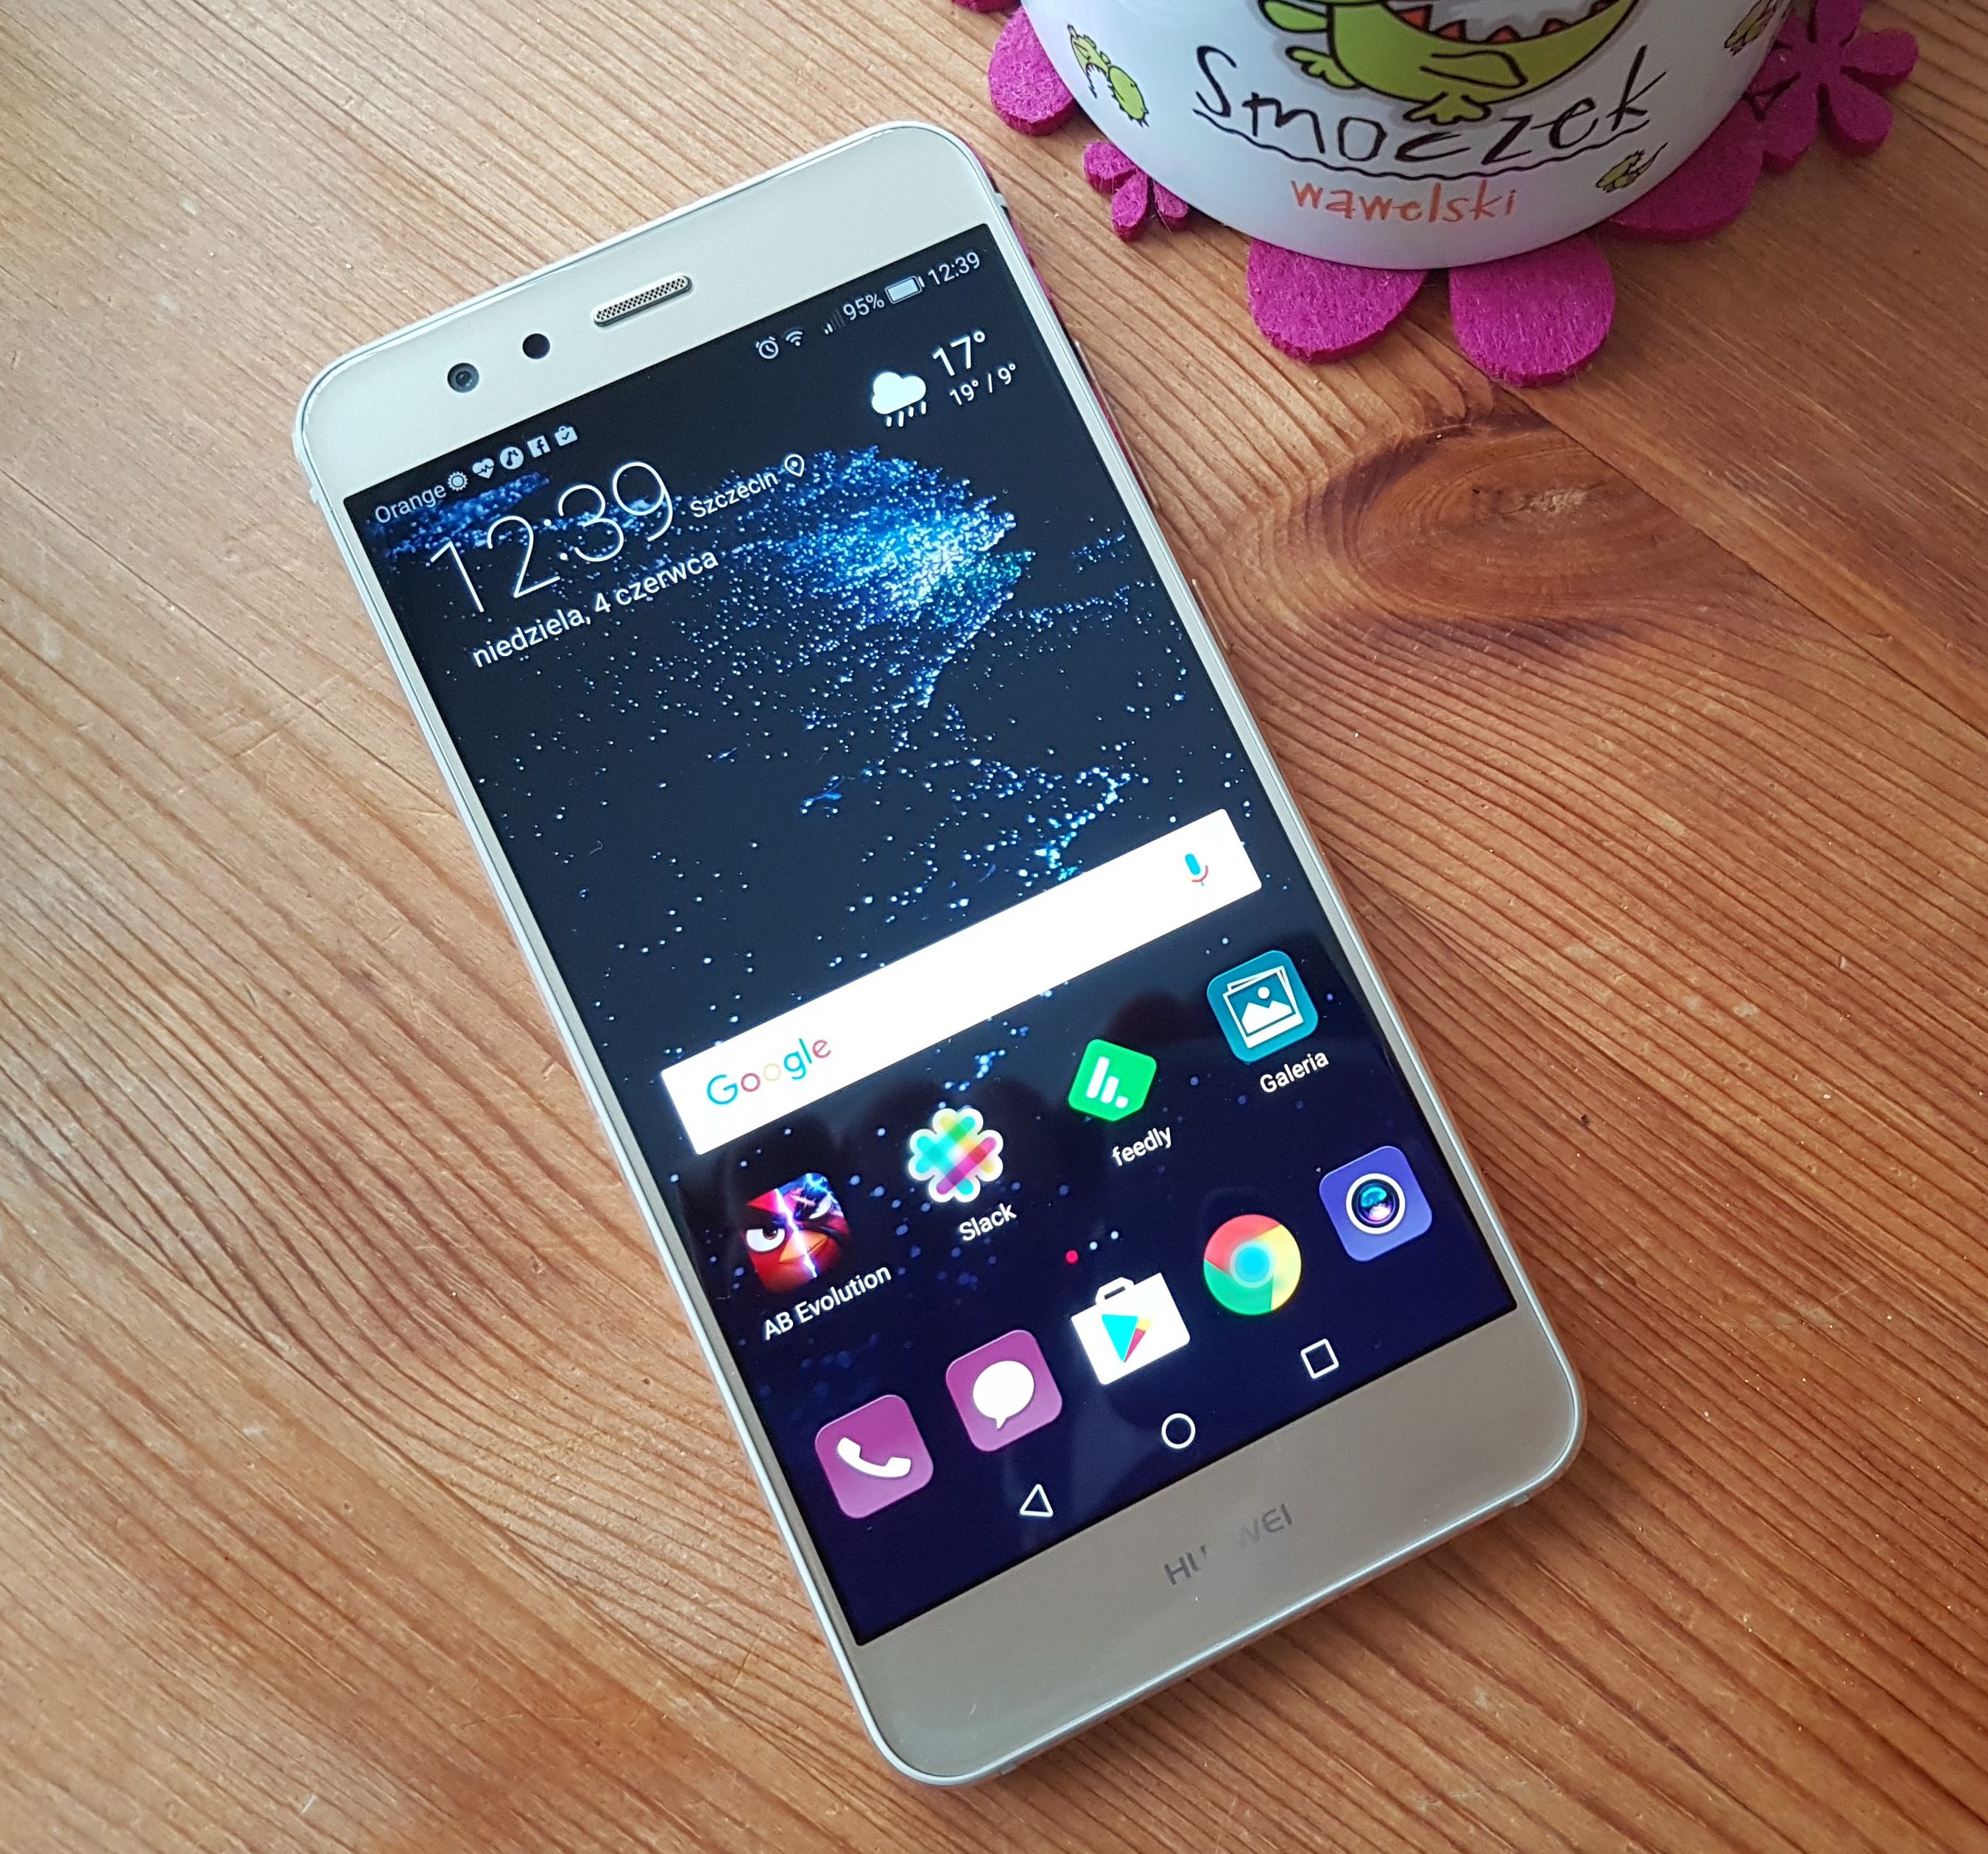 Huawei P10 lite - test i recenzja smartfona | gsmManiaK.pl